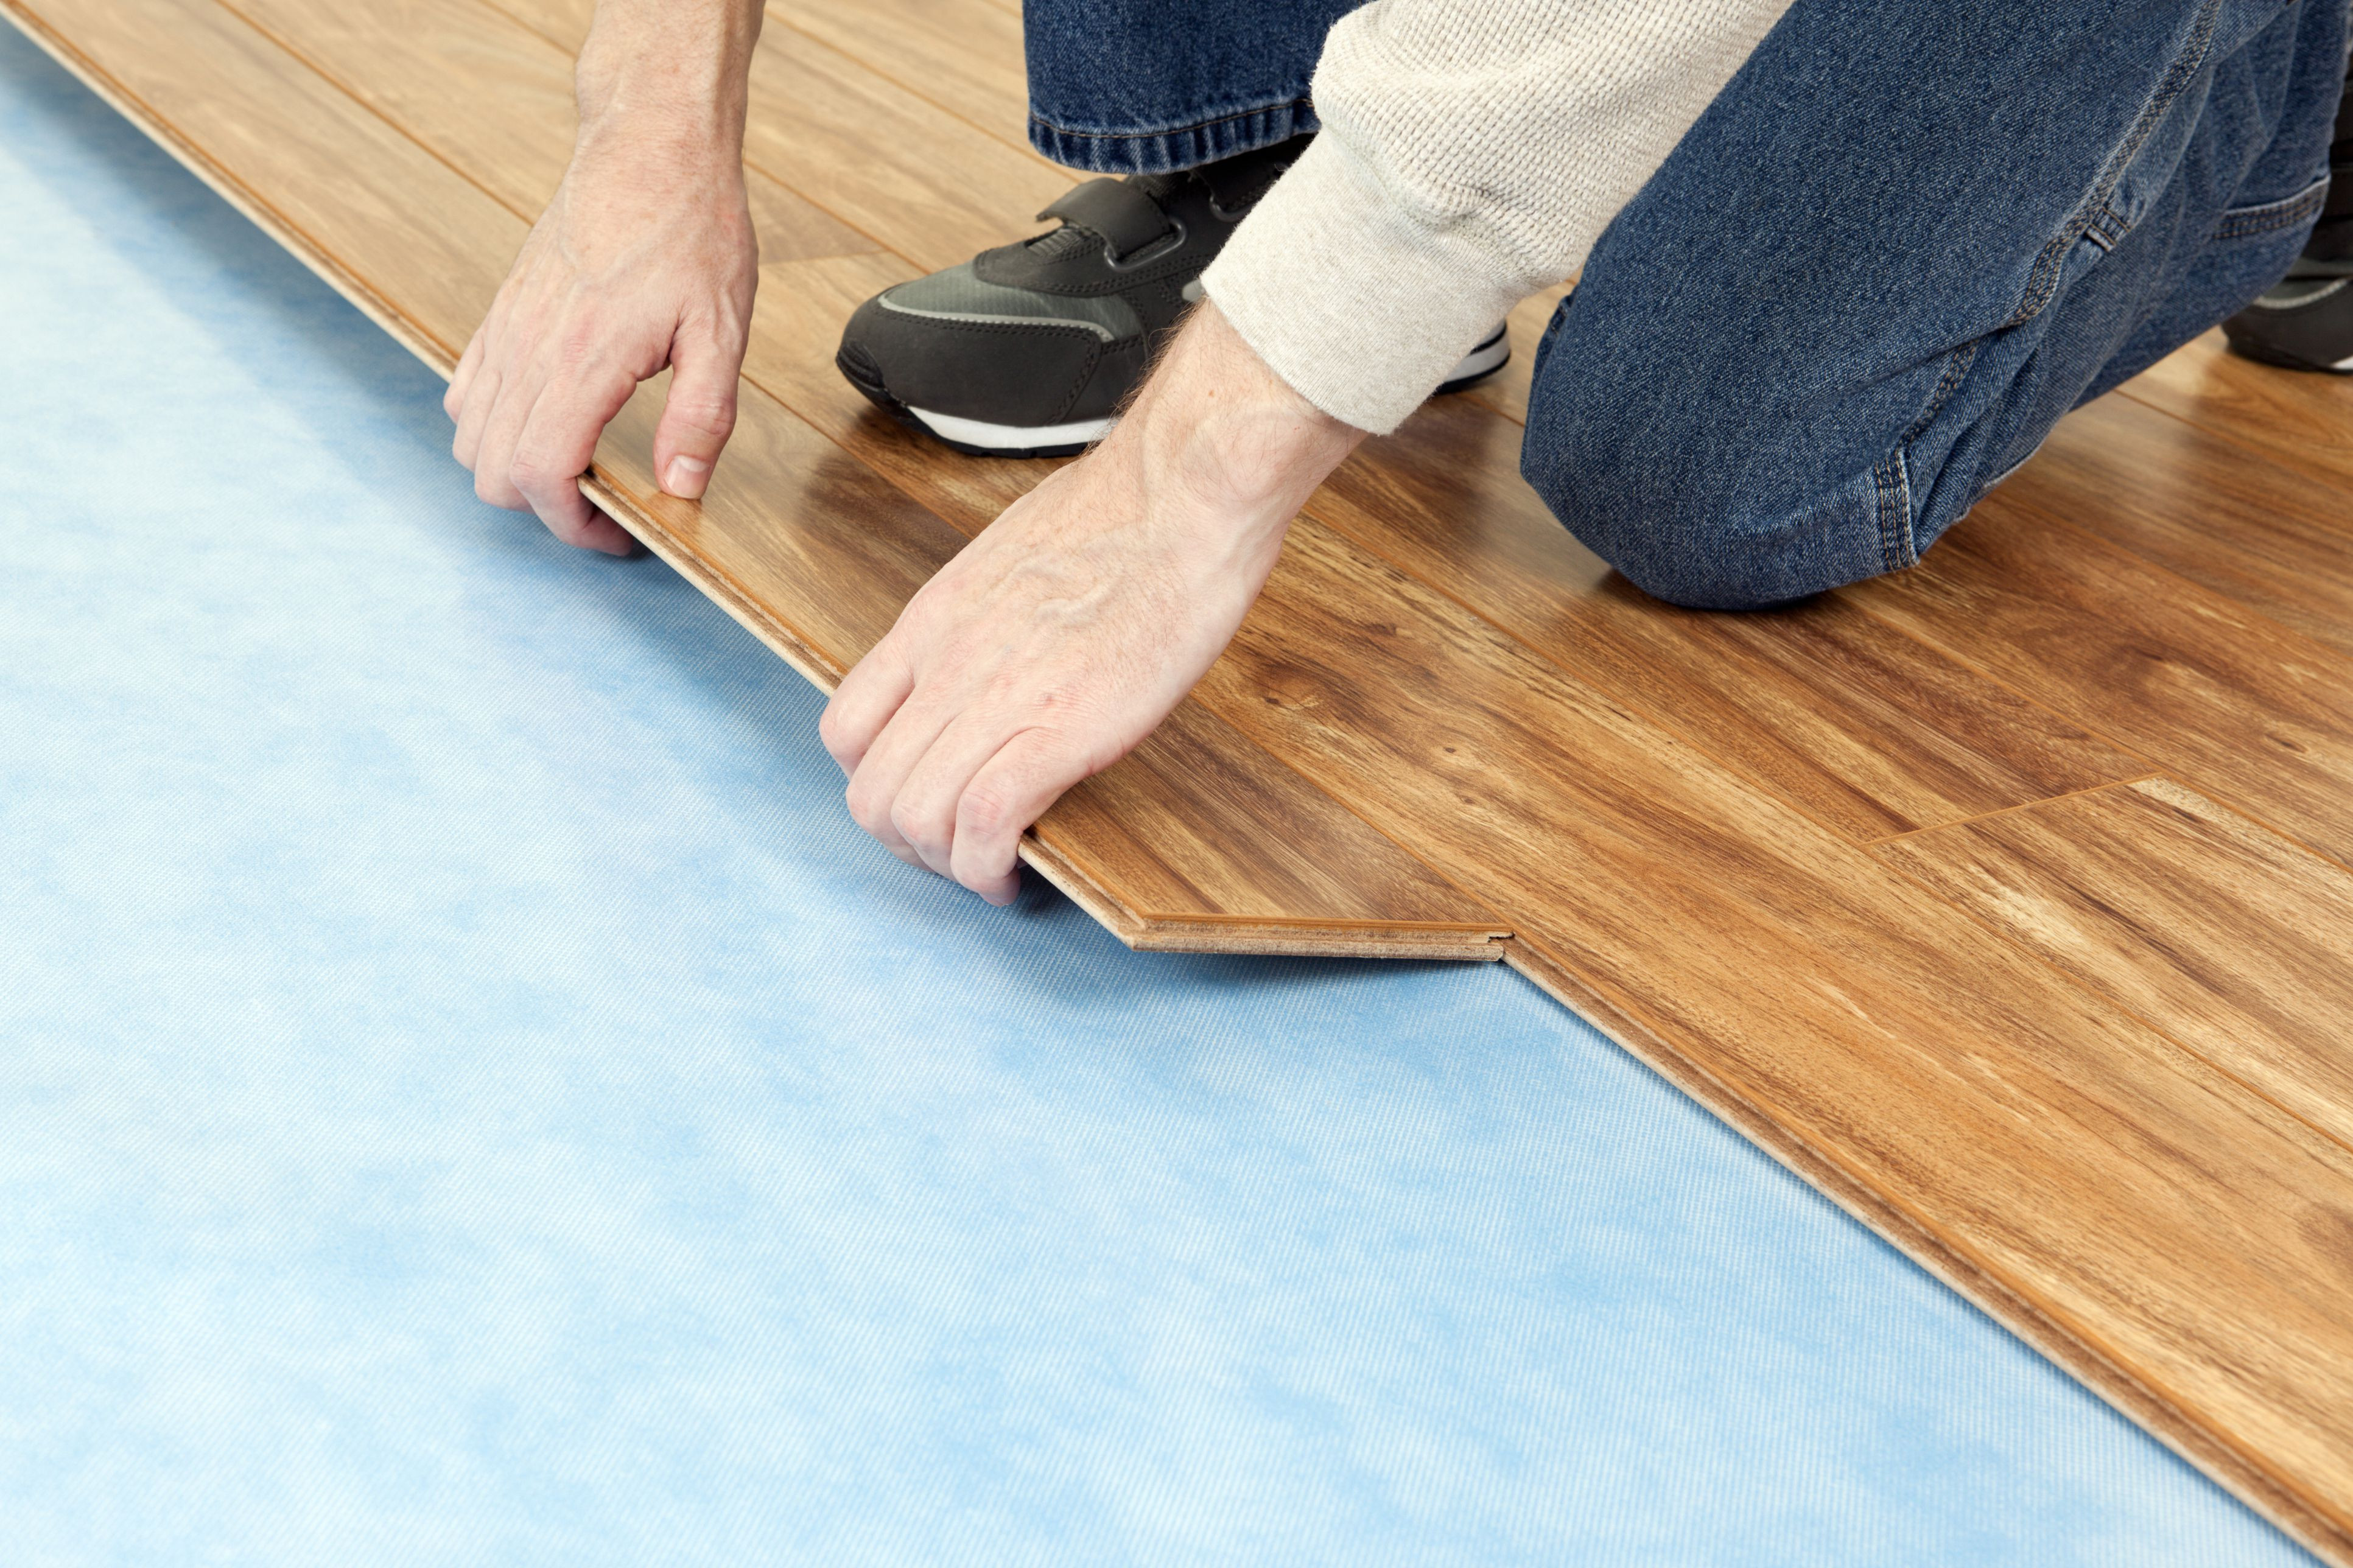 1 1 2 hardwood flooring of flooring underlayment the basics with new floor installation 185270632 582b722c3df78c6f6af0a8ab